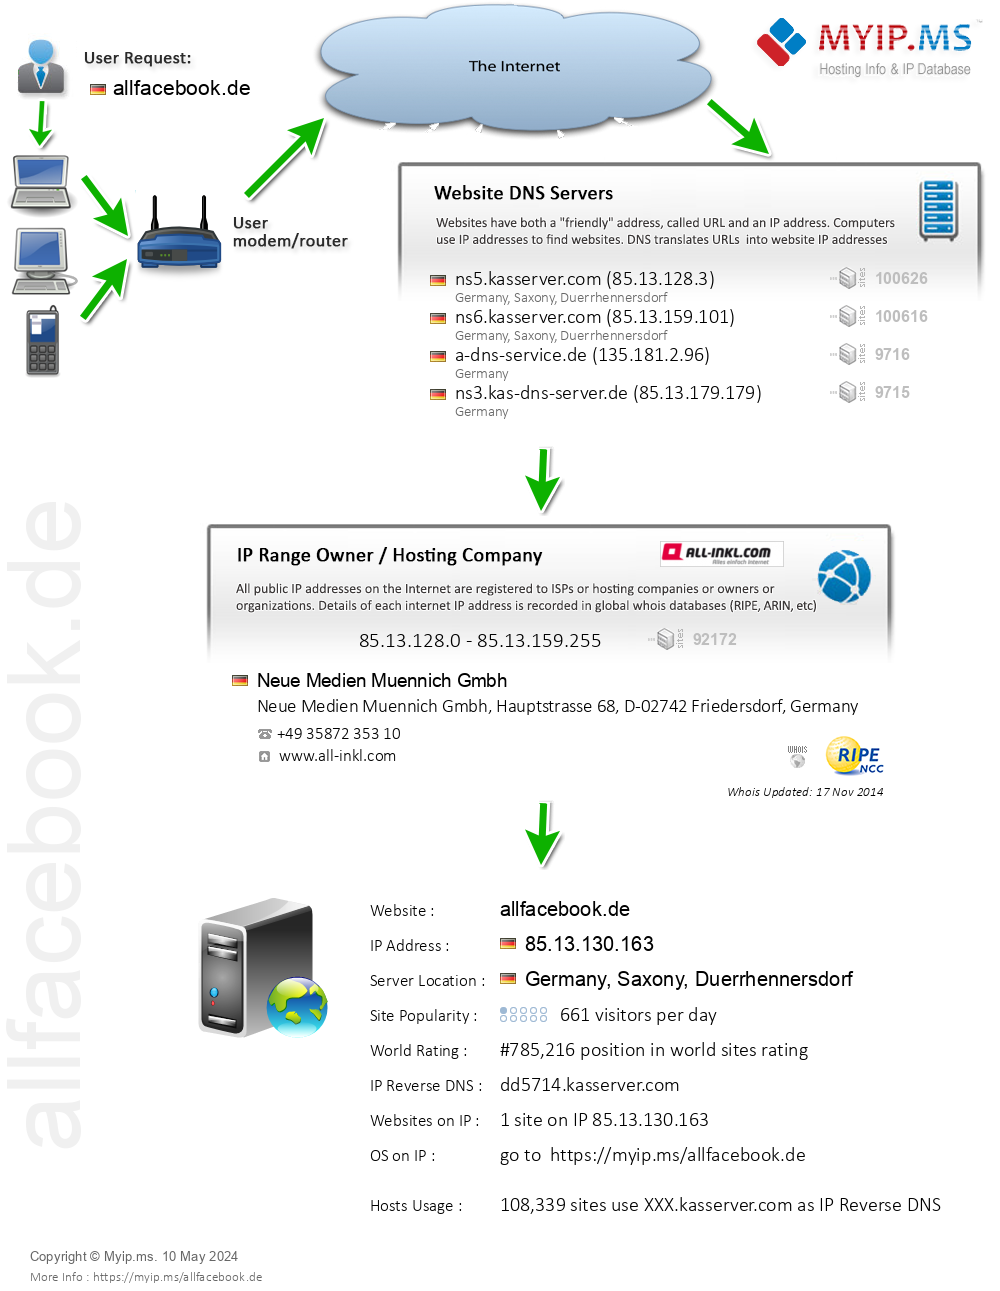 Allfacebook.de - Website Hosting Visual IP Diagram